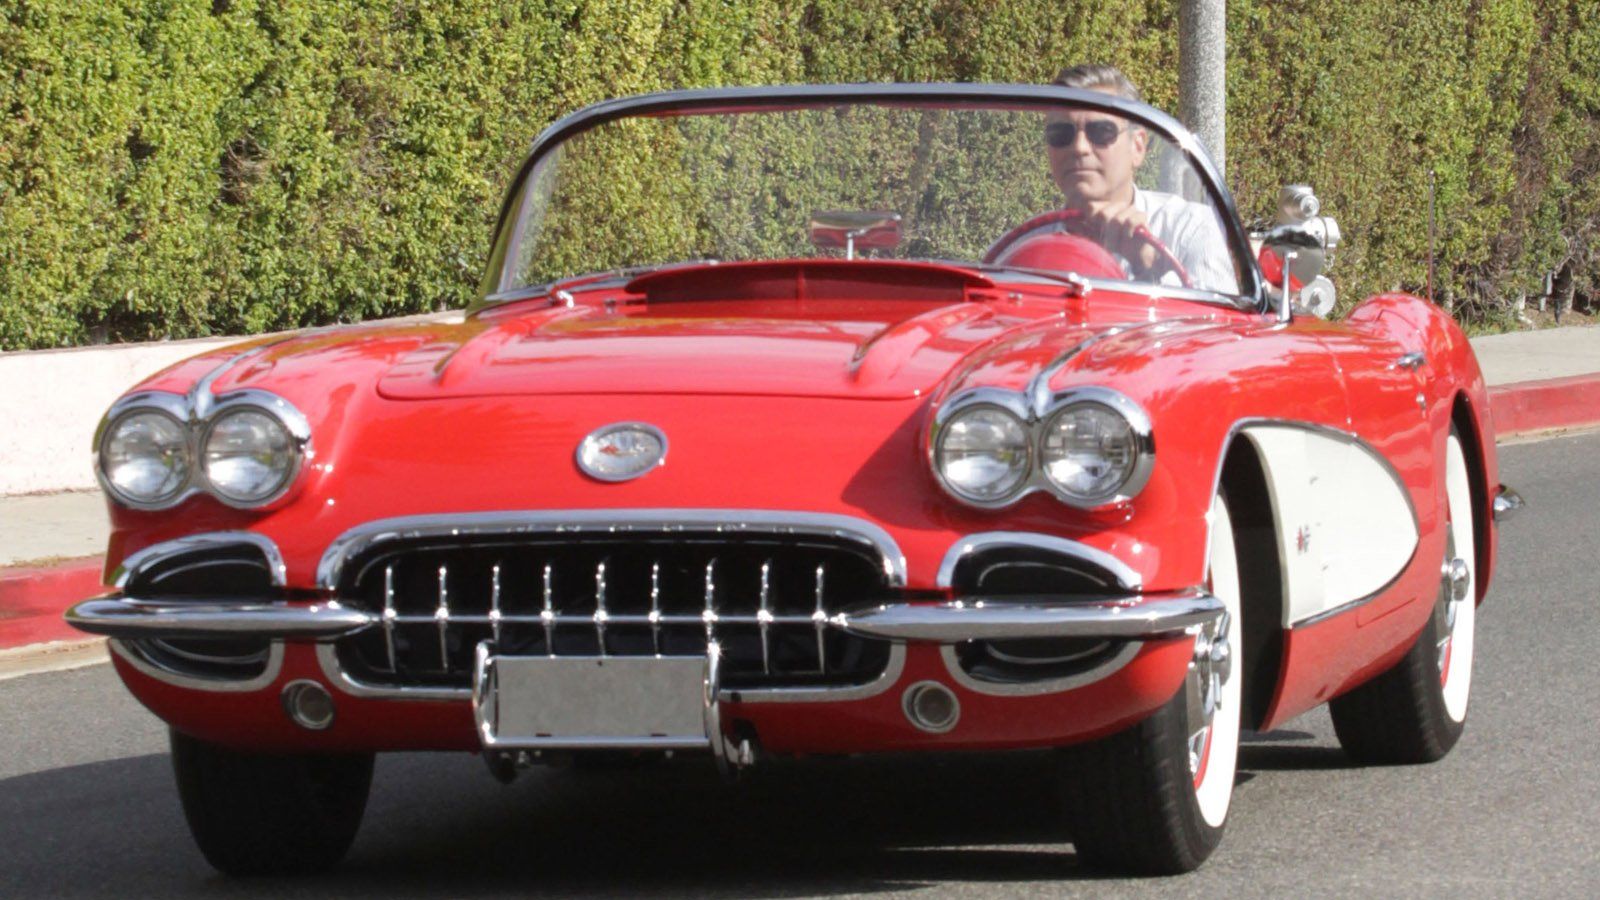 George Clooney - 1958 Chevrolet Corvette V8 C1 Convertible